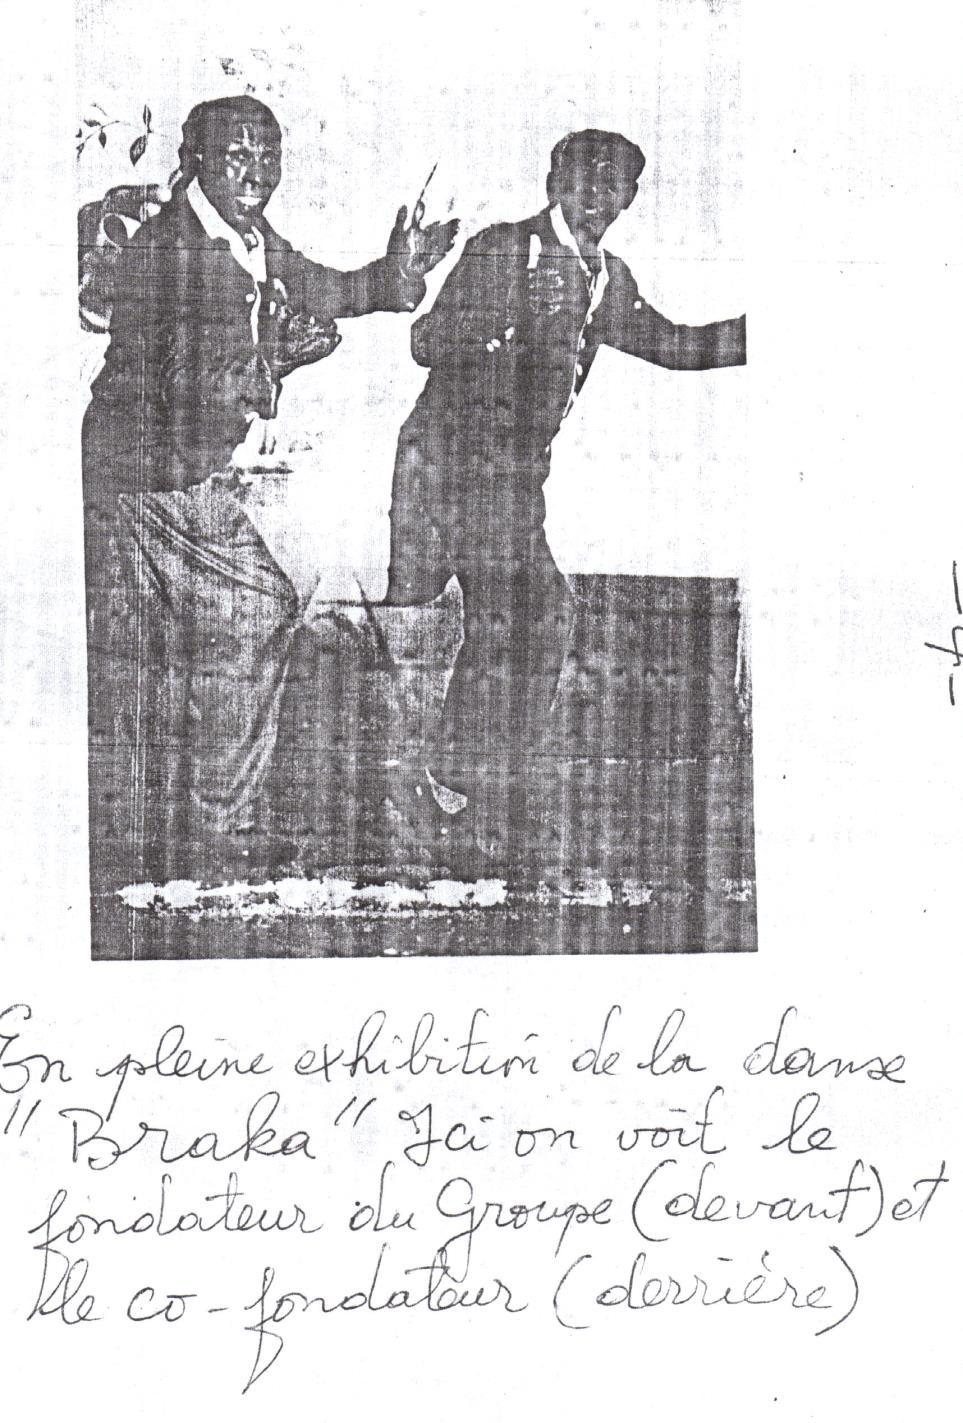 Photo 78: JECOKE, dancing the "BRAKA" 133 So Kalmery, describes the Braka (aka Brakka) as a Congolese dance of the 1920s, incorporating Jive, Flamenco, Step, Samba, Belly-dancing and Breakdance.